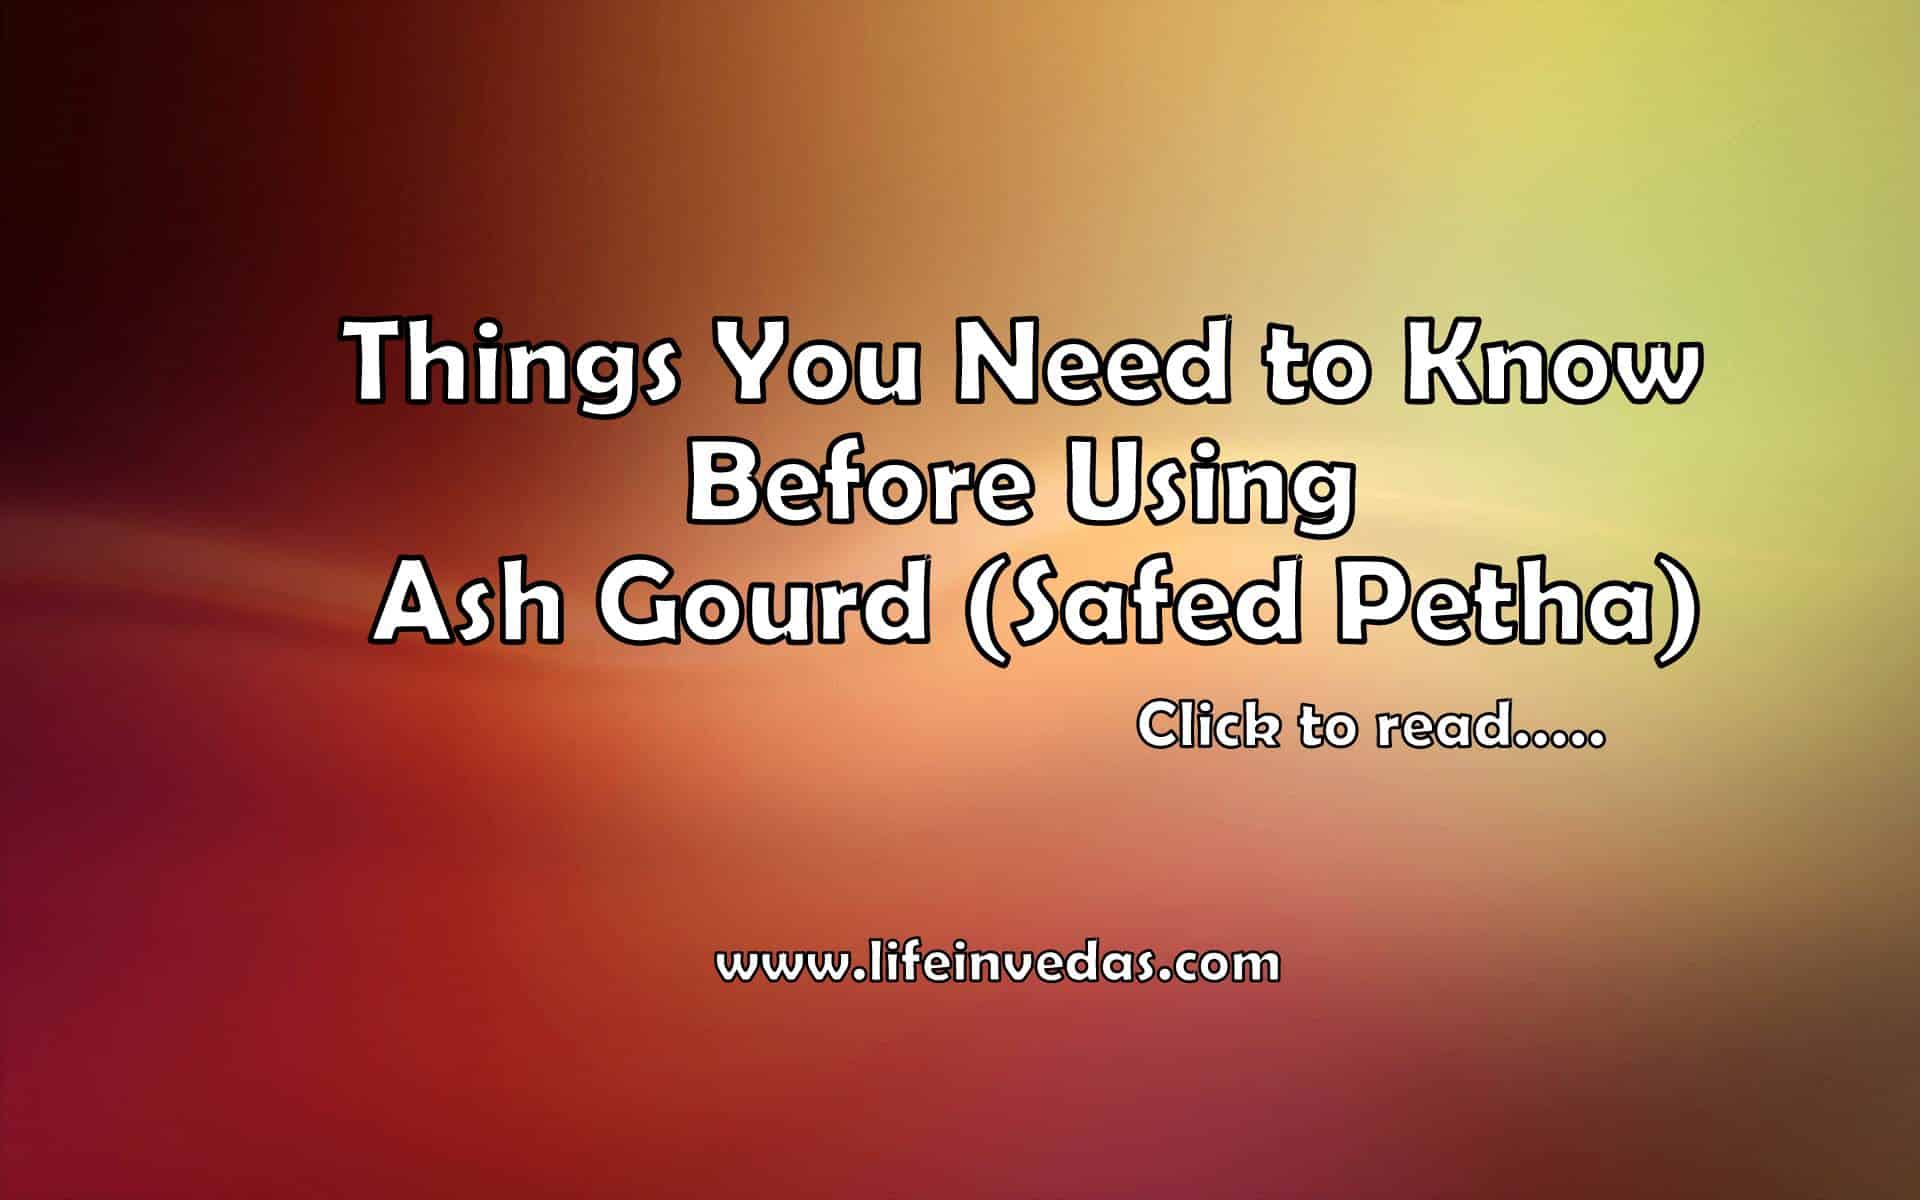 Ash Gourd or Safed Petha benefits